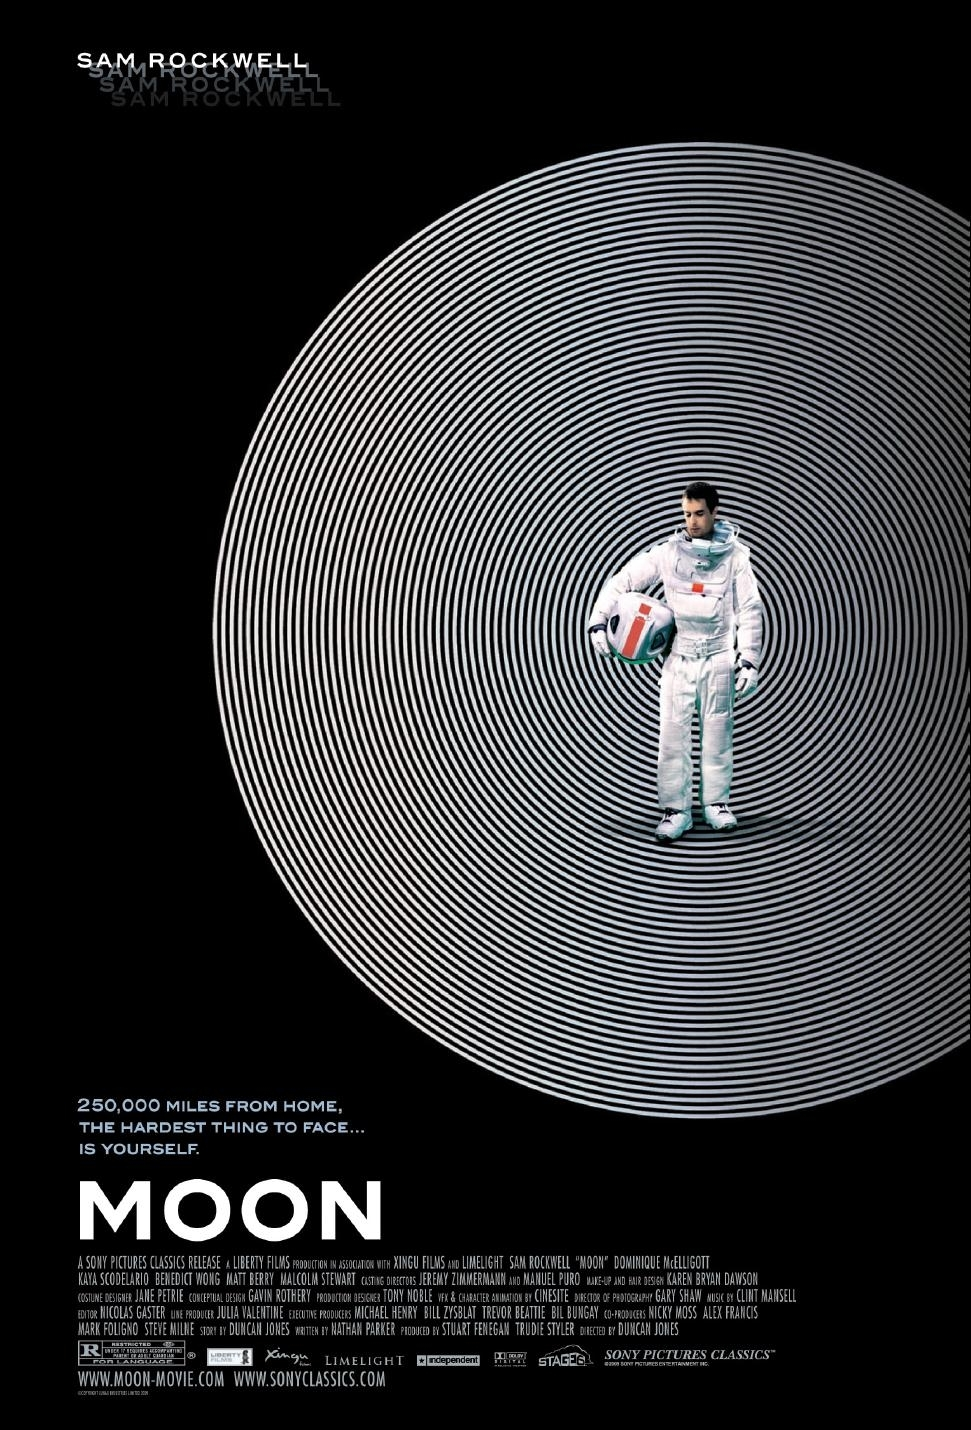 Moon (2009) sci-fi movies